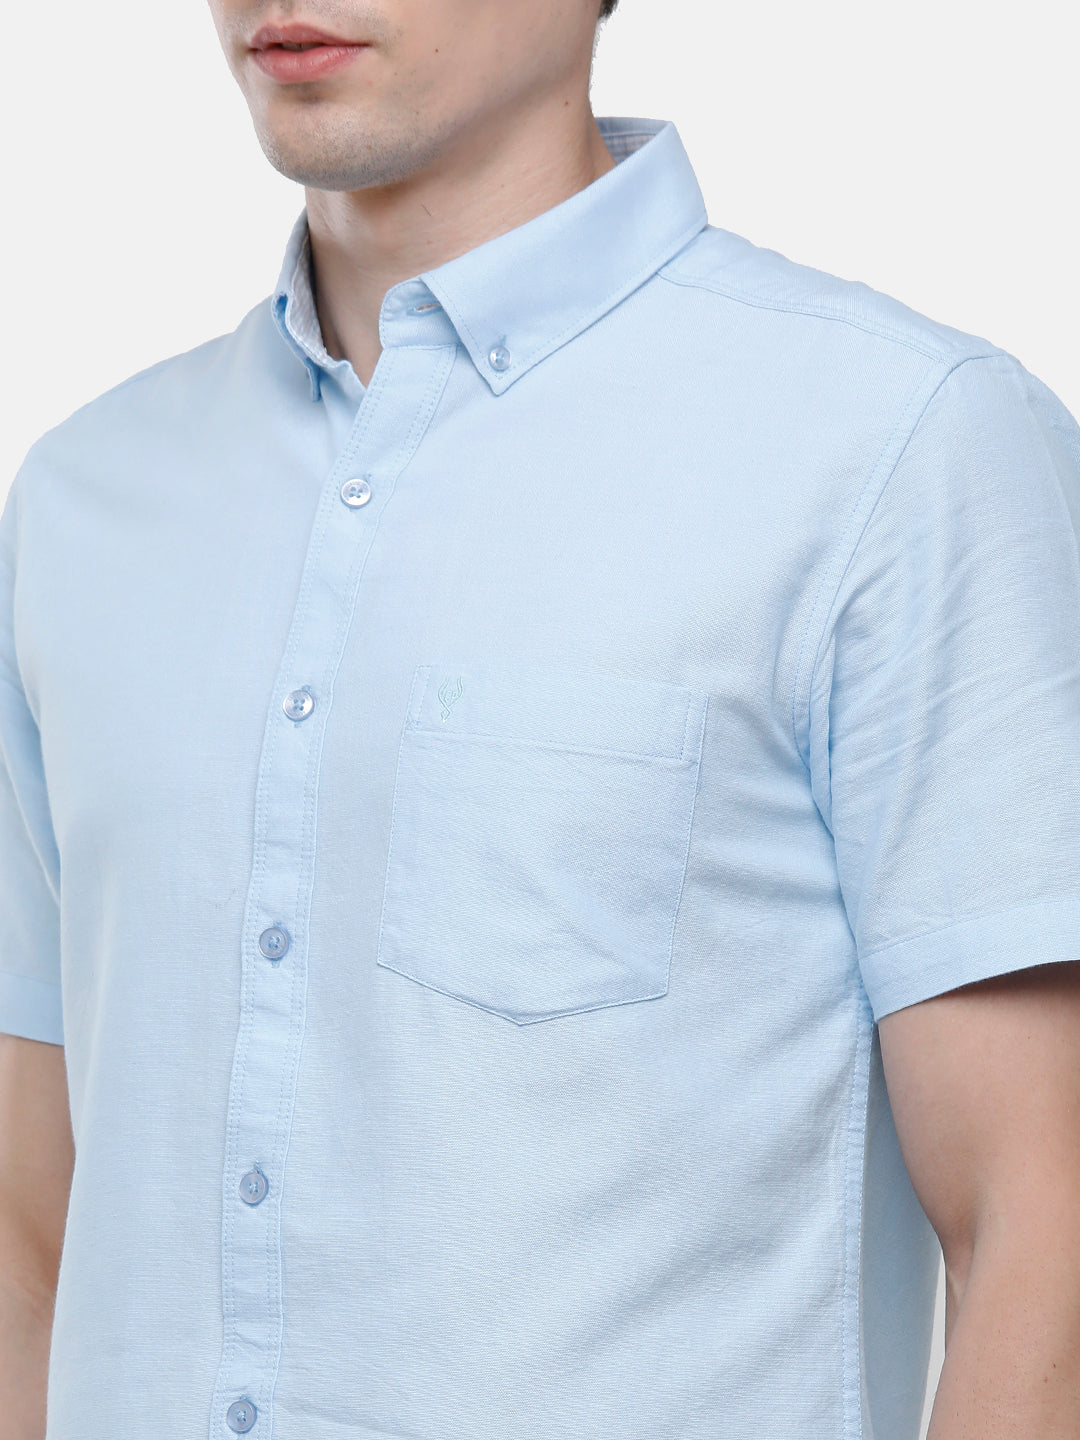 Classic Polo Men's Cotton Light Blue Solid Half Sleeve Shirt - Enzo-L.Blue-Mf-Hs